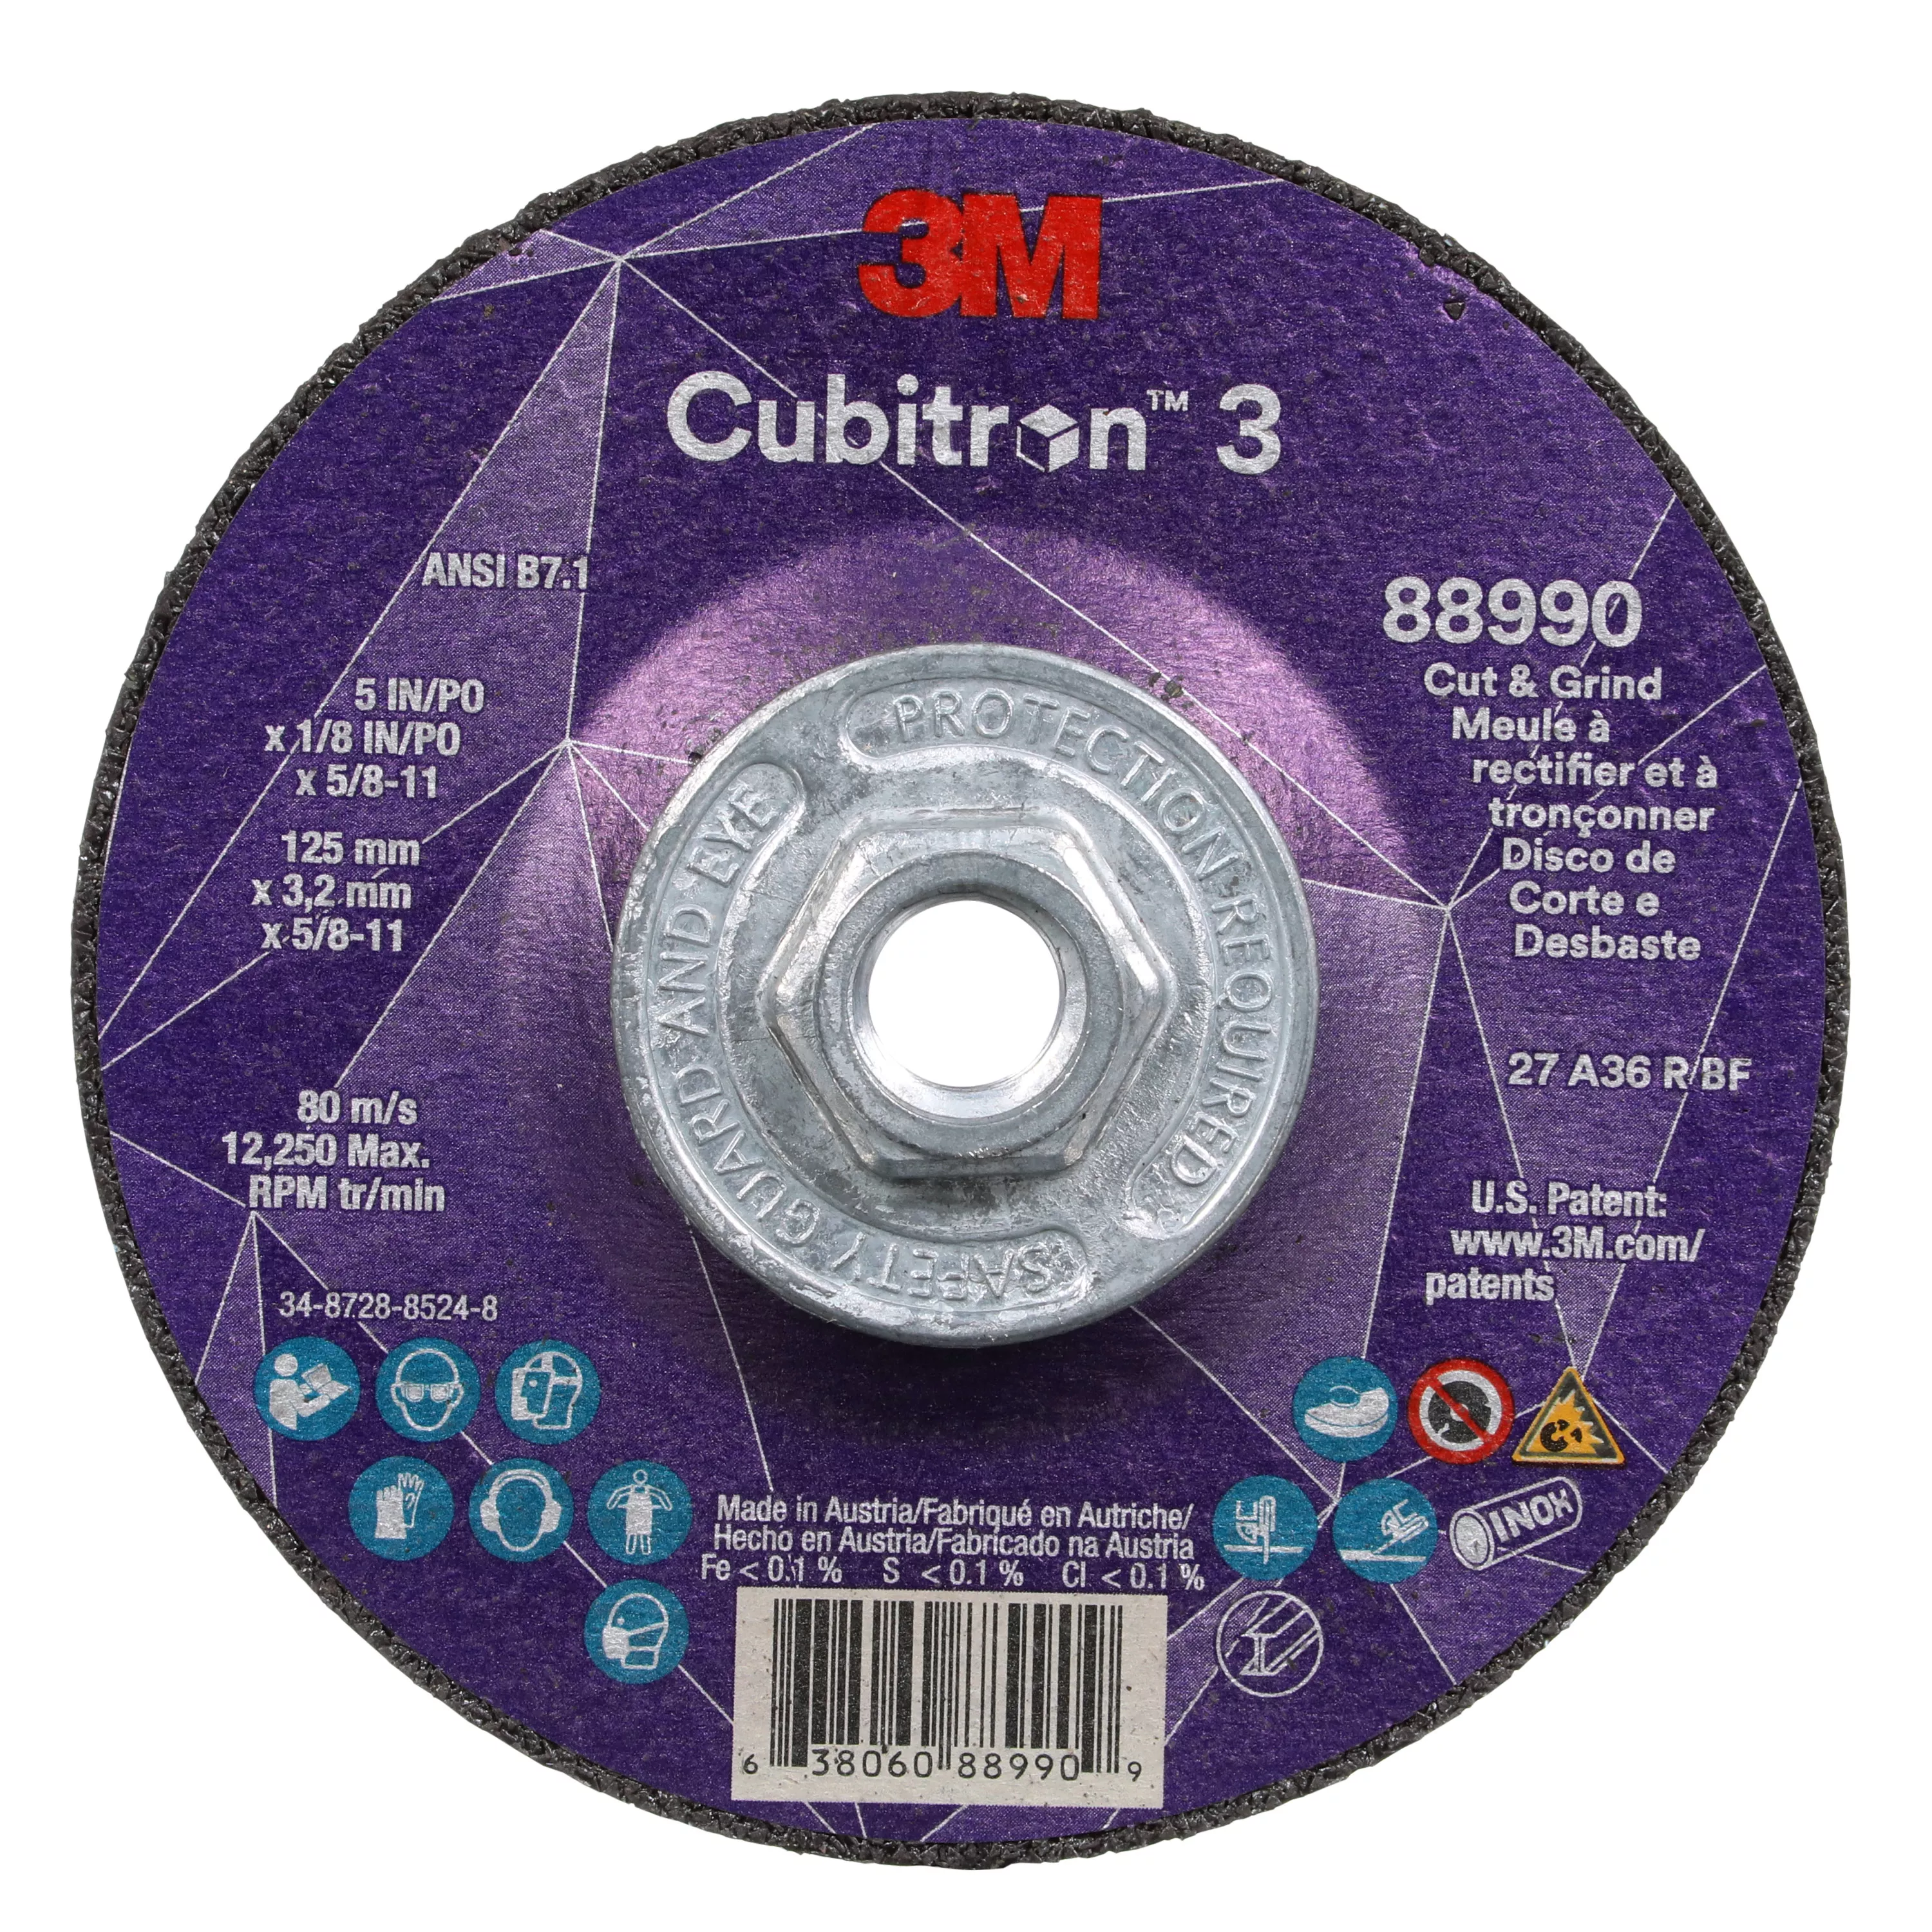 SKU 7100313204 | 3M™ Cubitron™ 3 Cut and Grind Wheel